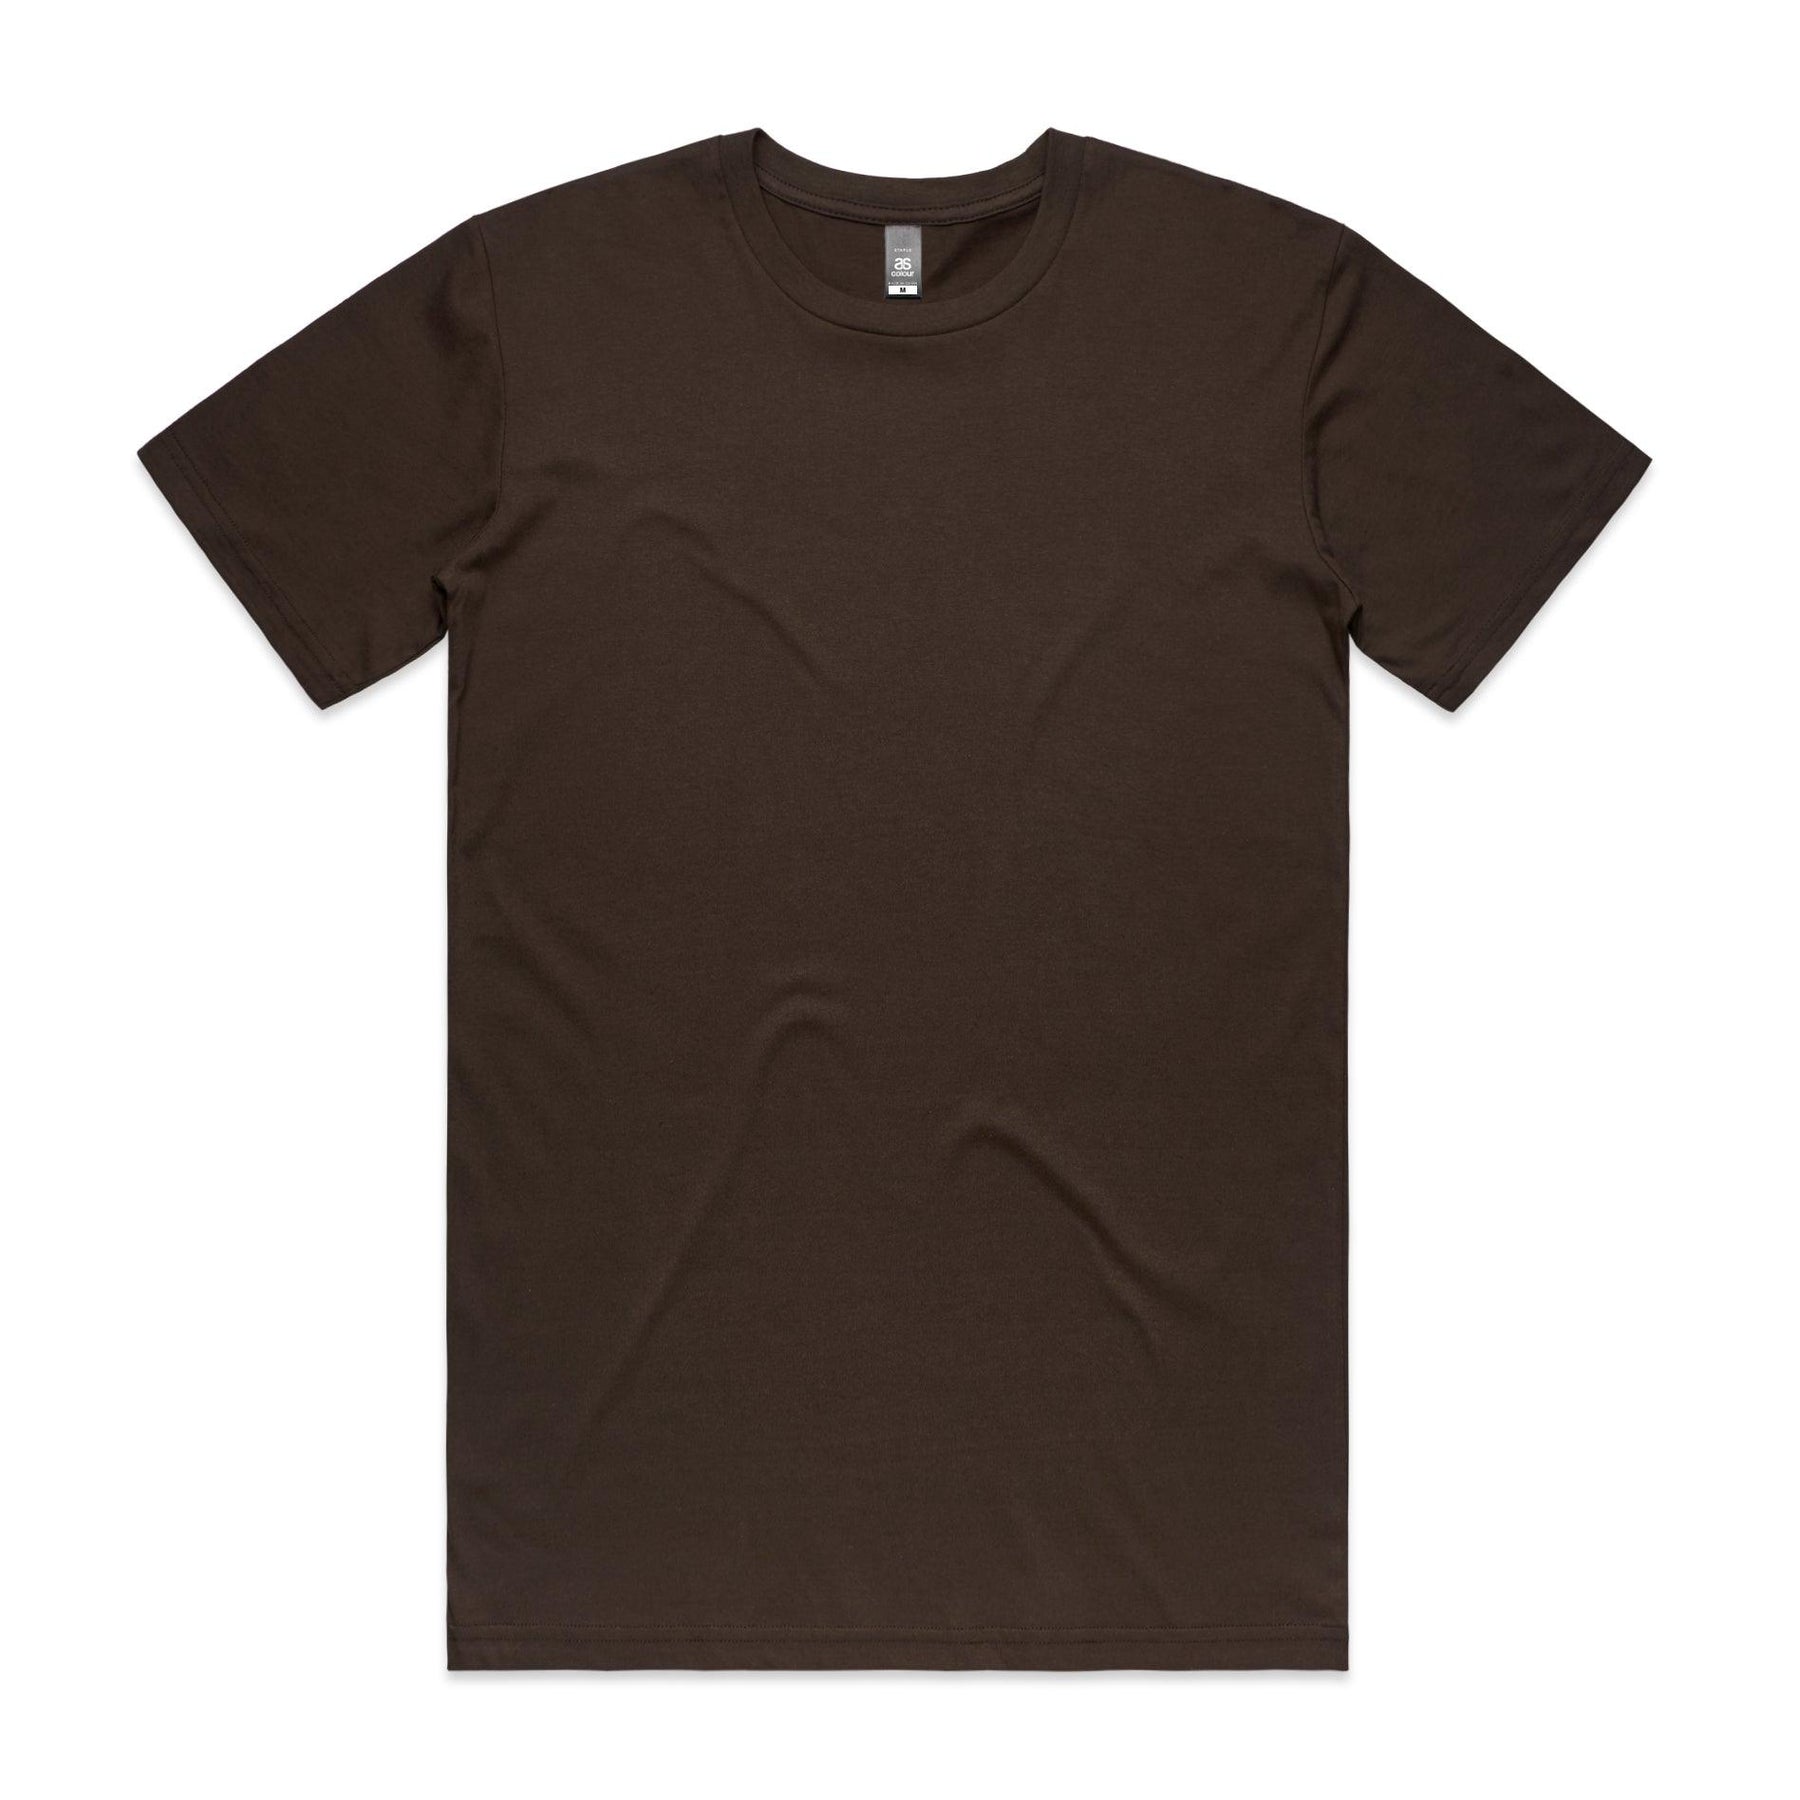 Cotton Shirt For Man - Black - NZ-5001